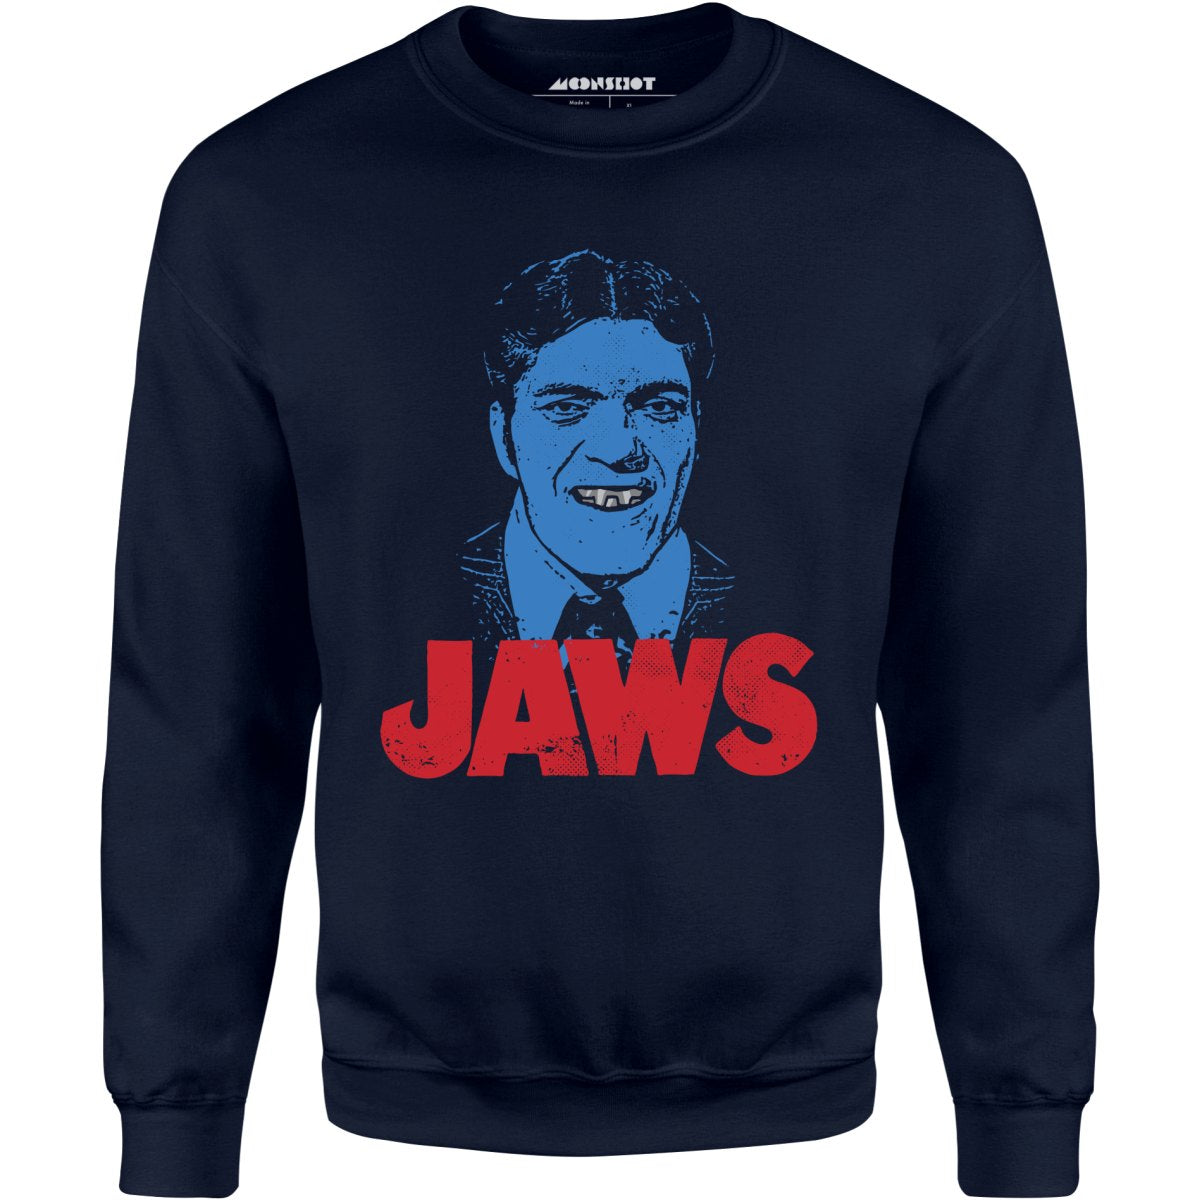 Jaws 007 - Unisex Sweatshirt